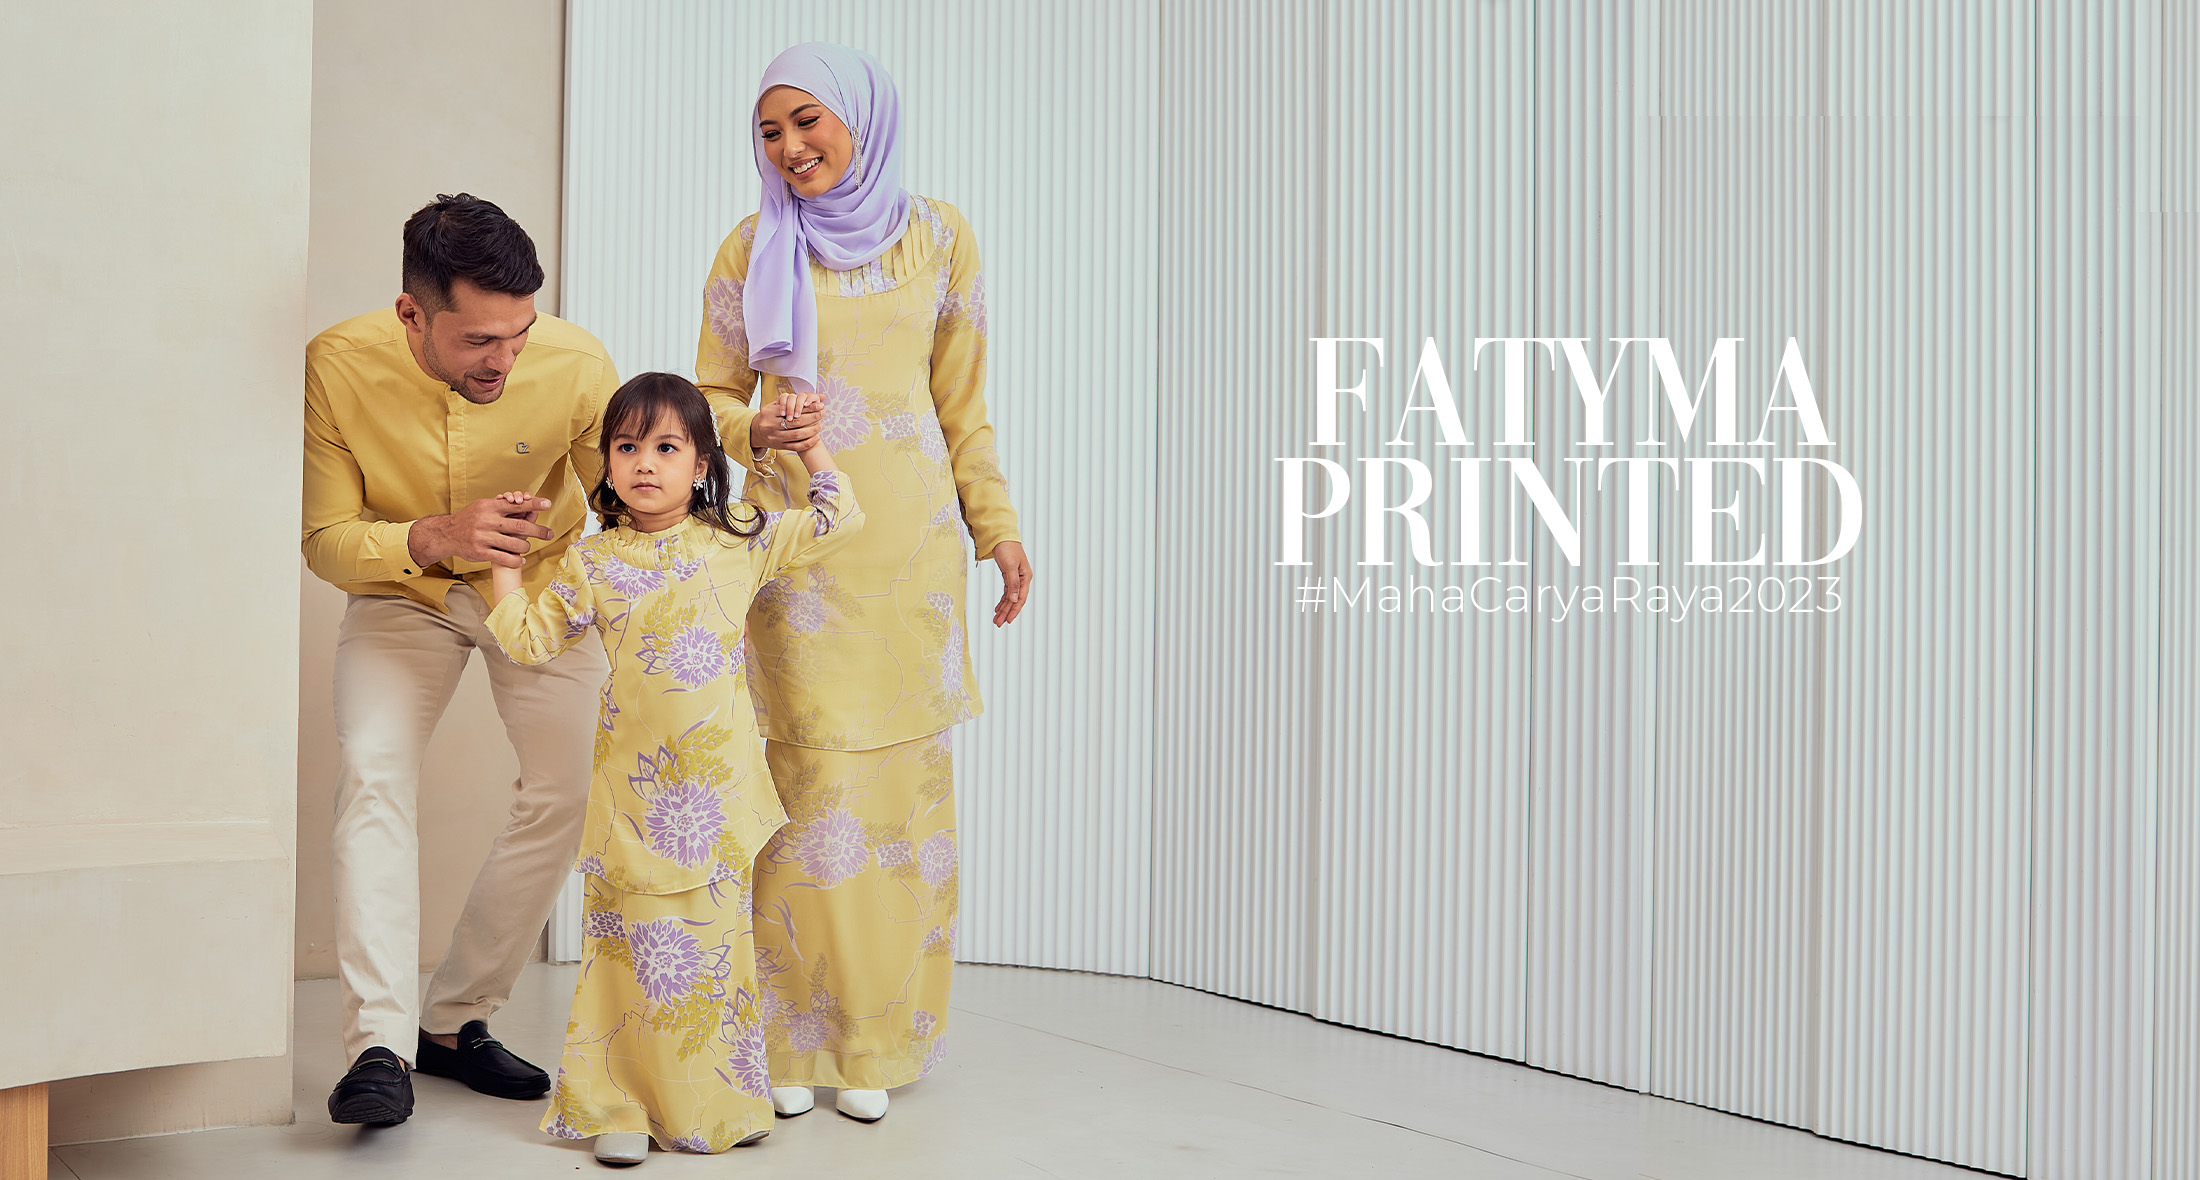 Fatyma Printed